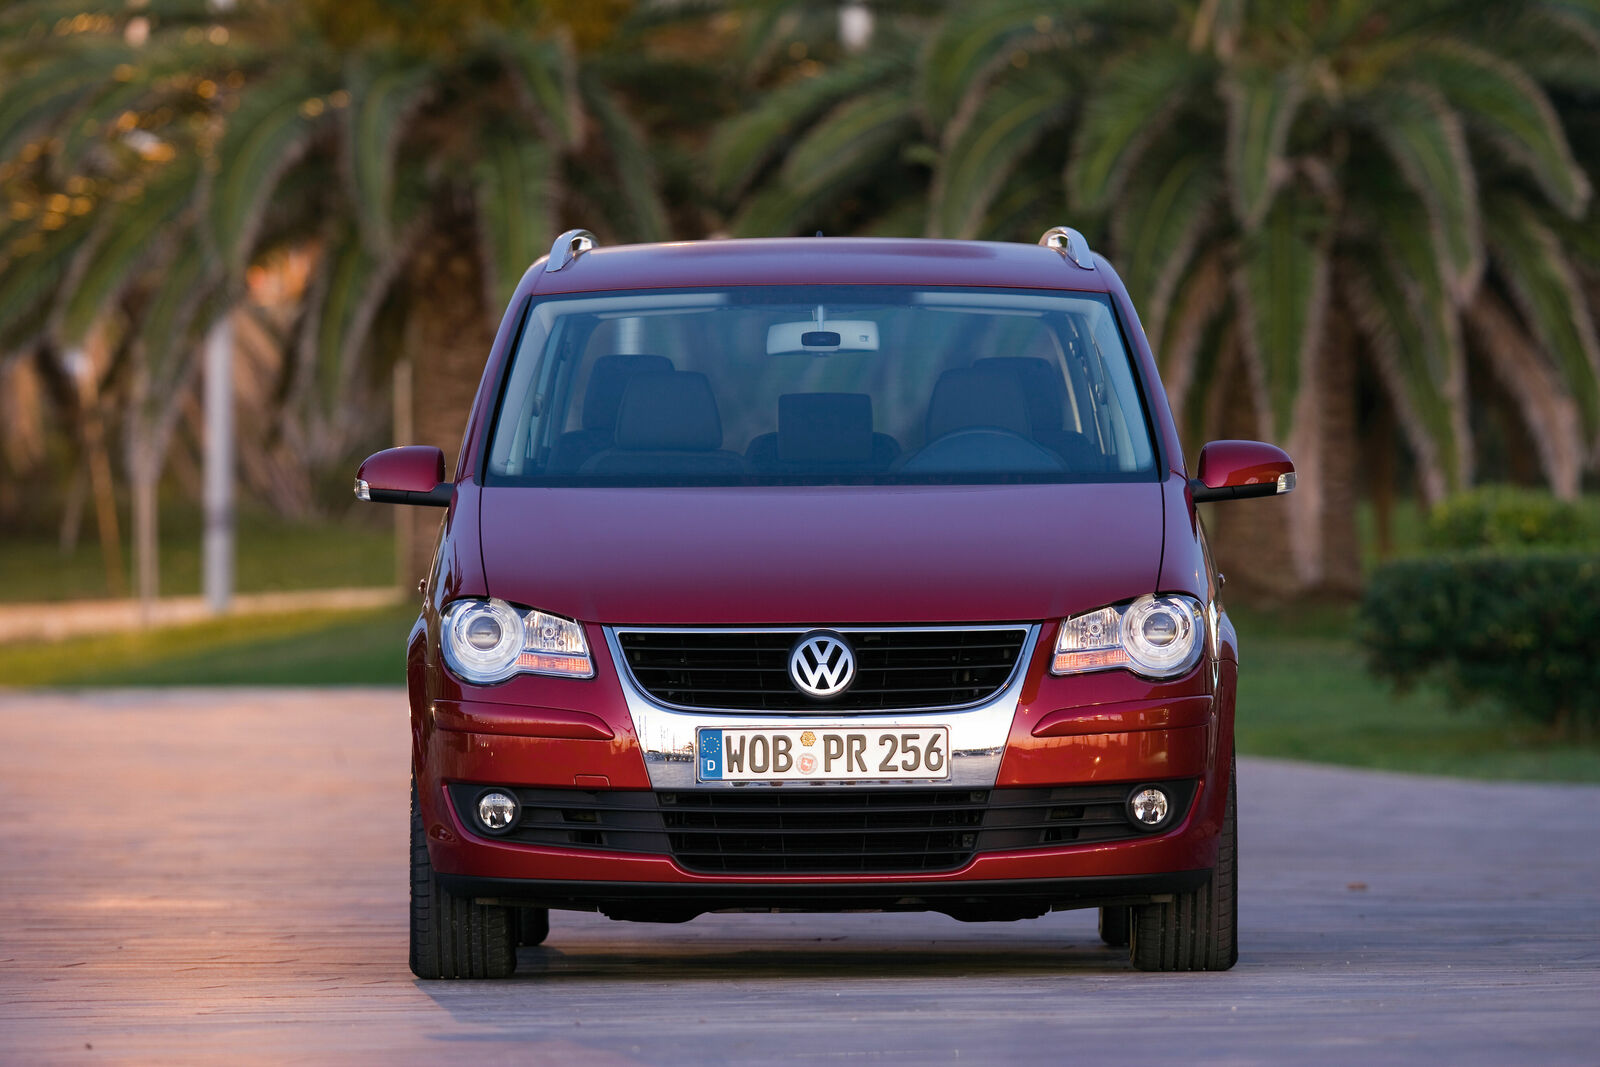 Austria November 2013: VW Touran in Top 10 – Best Selling Cars Blog